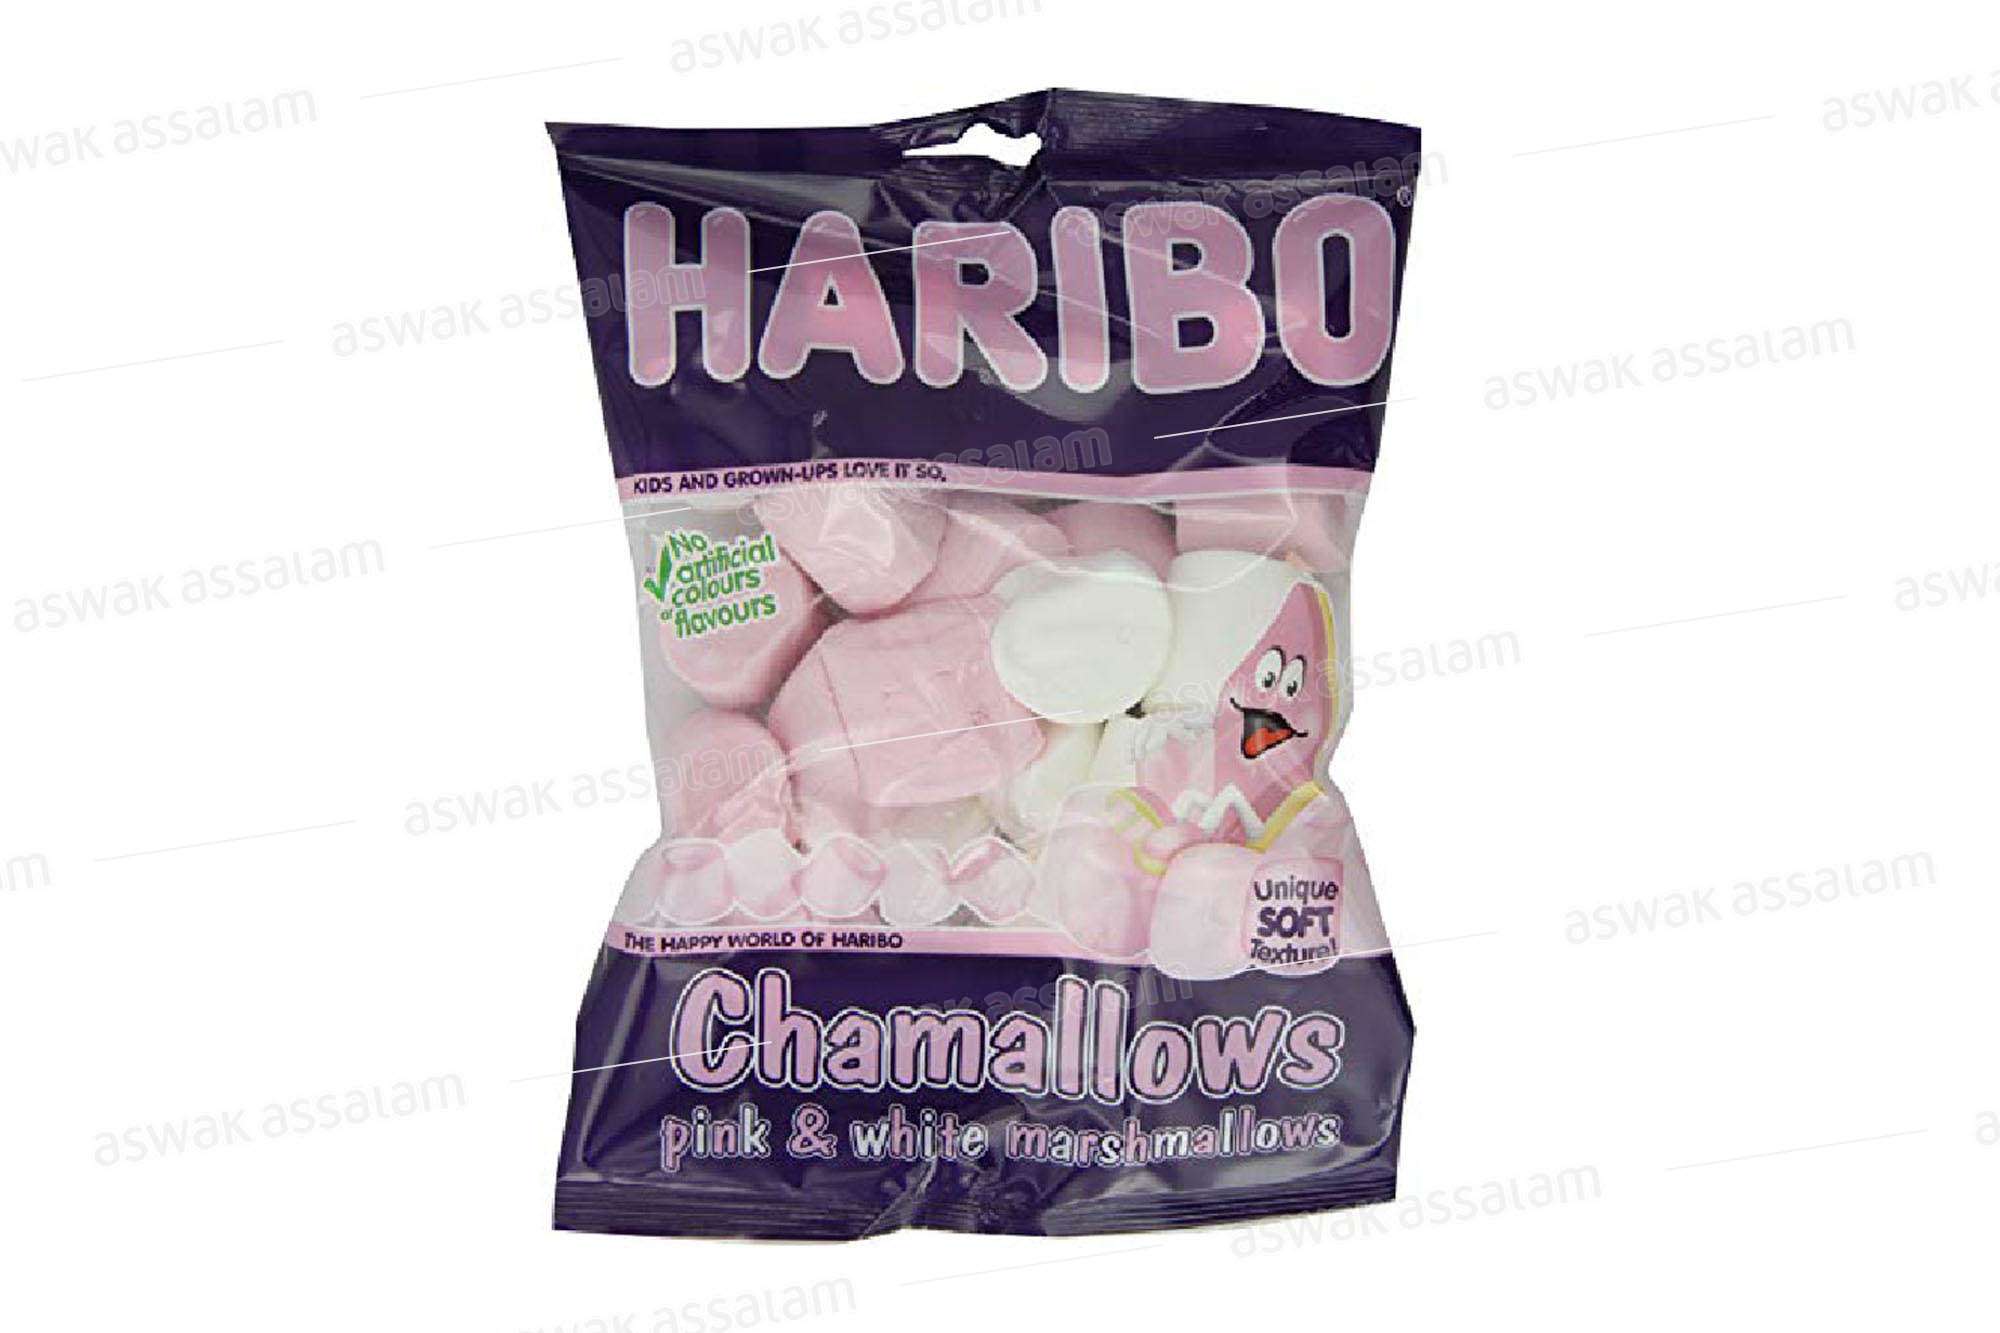 BONBONS CHAMALLOW PINK & WHITE 150G HARIBO